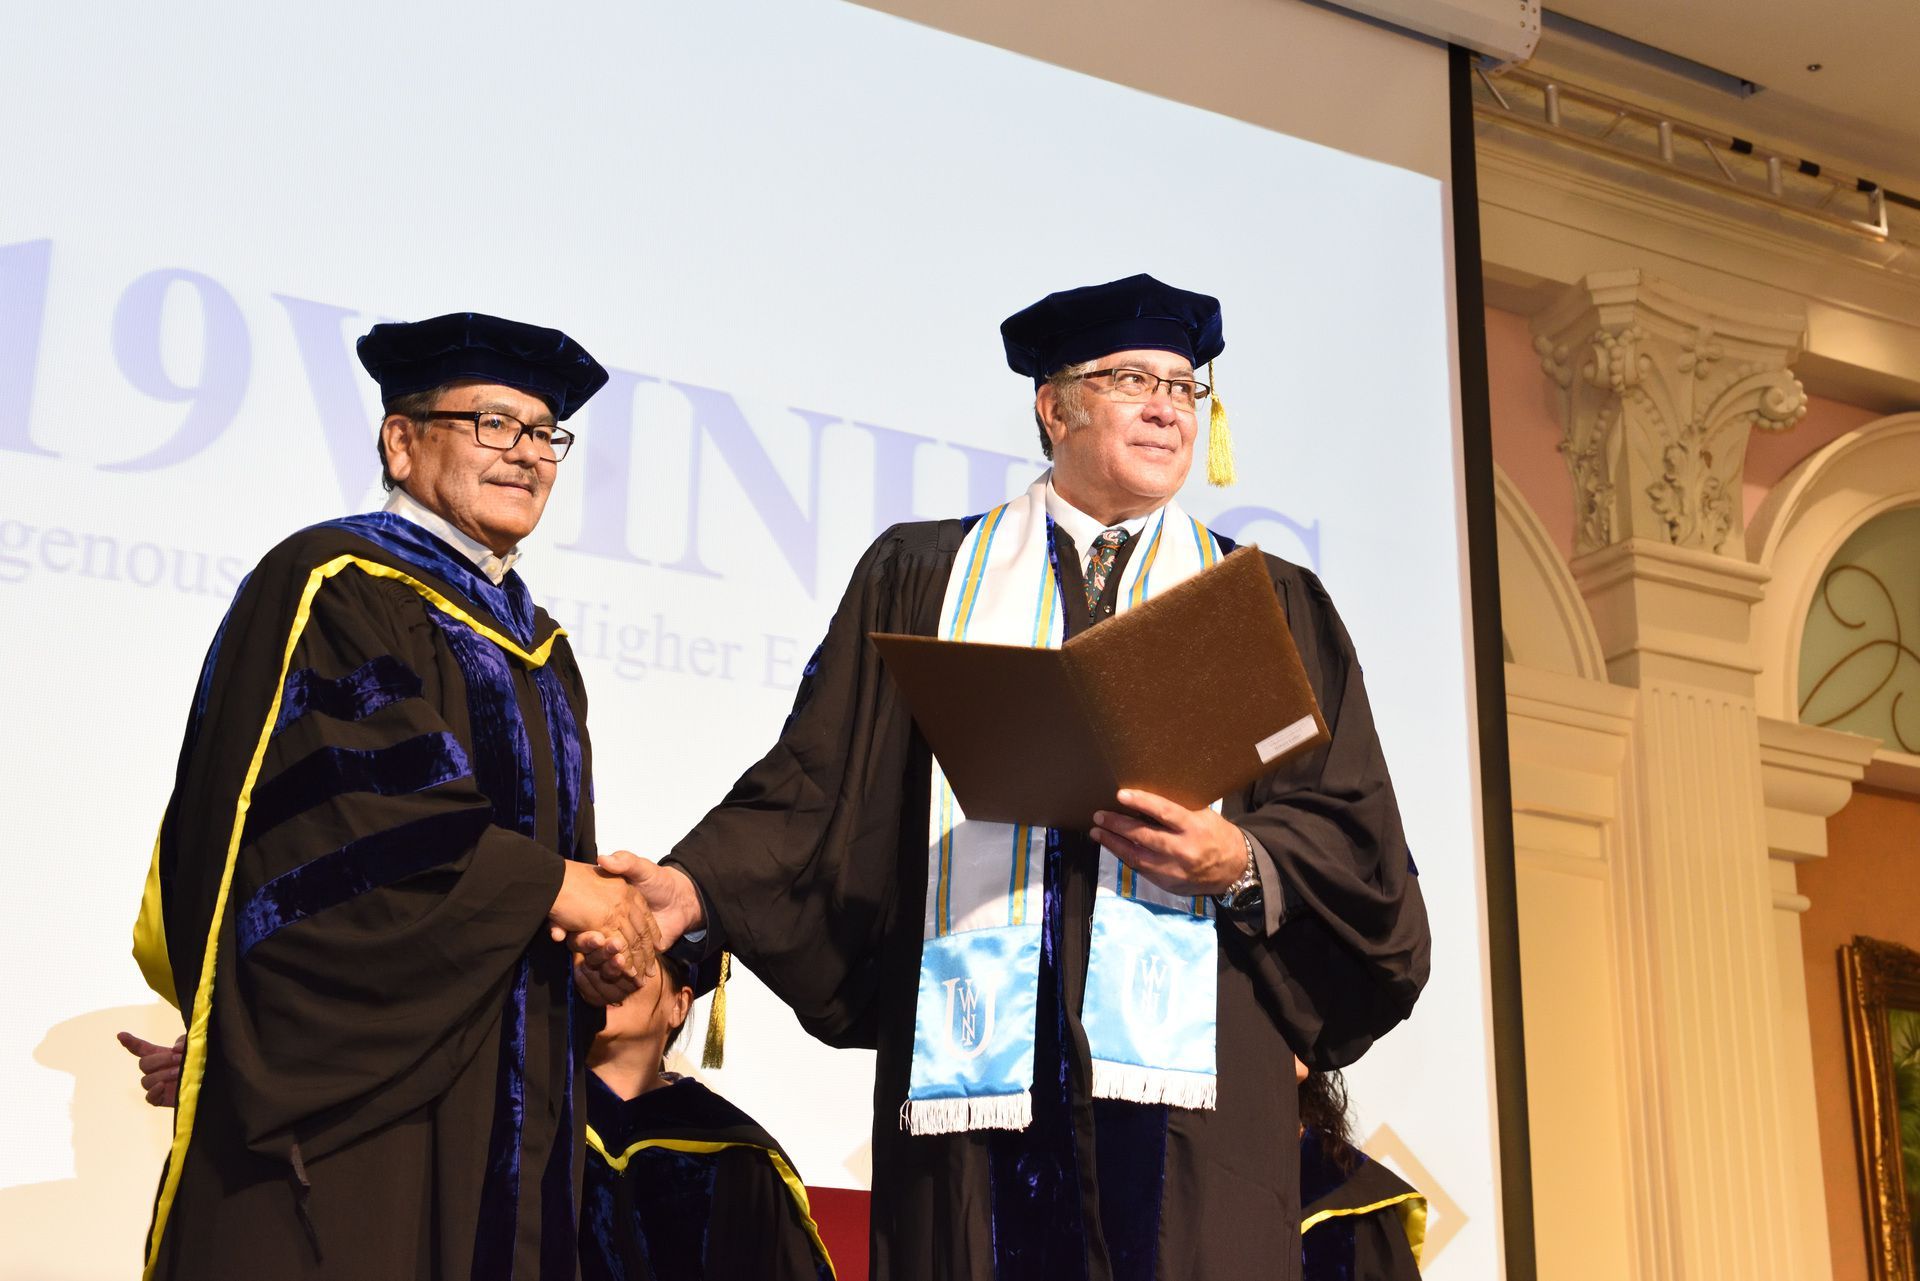 WINHEC 共同主席Dr. Elmer Guy （圖左）頒發榮譽領袖獎項給前任共同主席紐西蘭籍的Dr. Hohaia Collier （圖右）。Dr. Collier 於今年接任世界原住民族大學校長